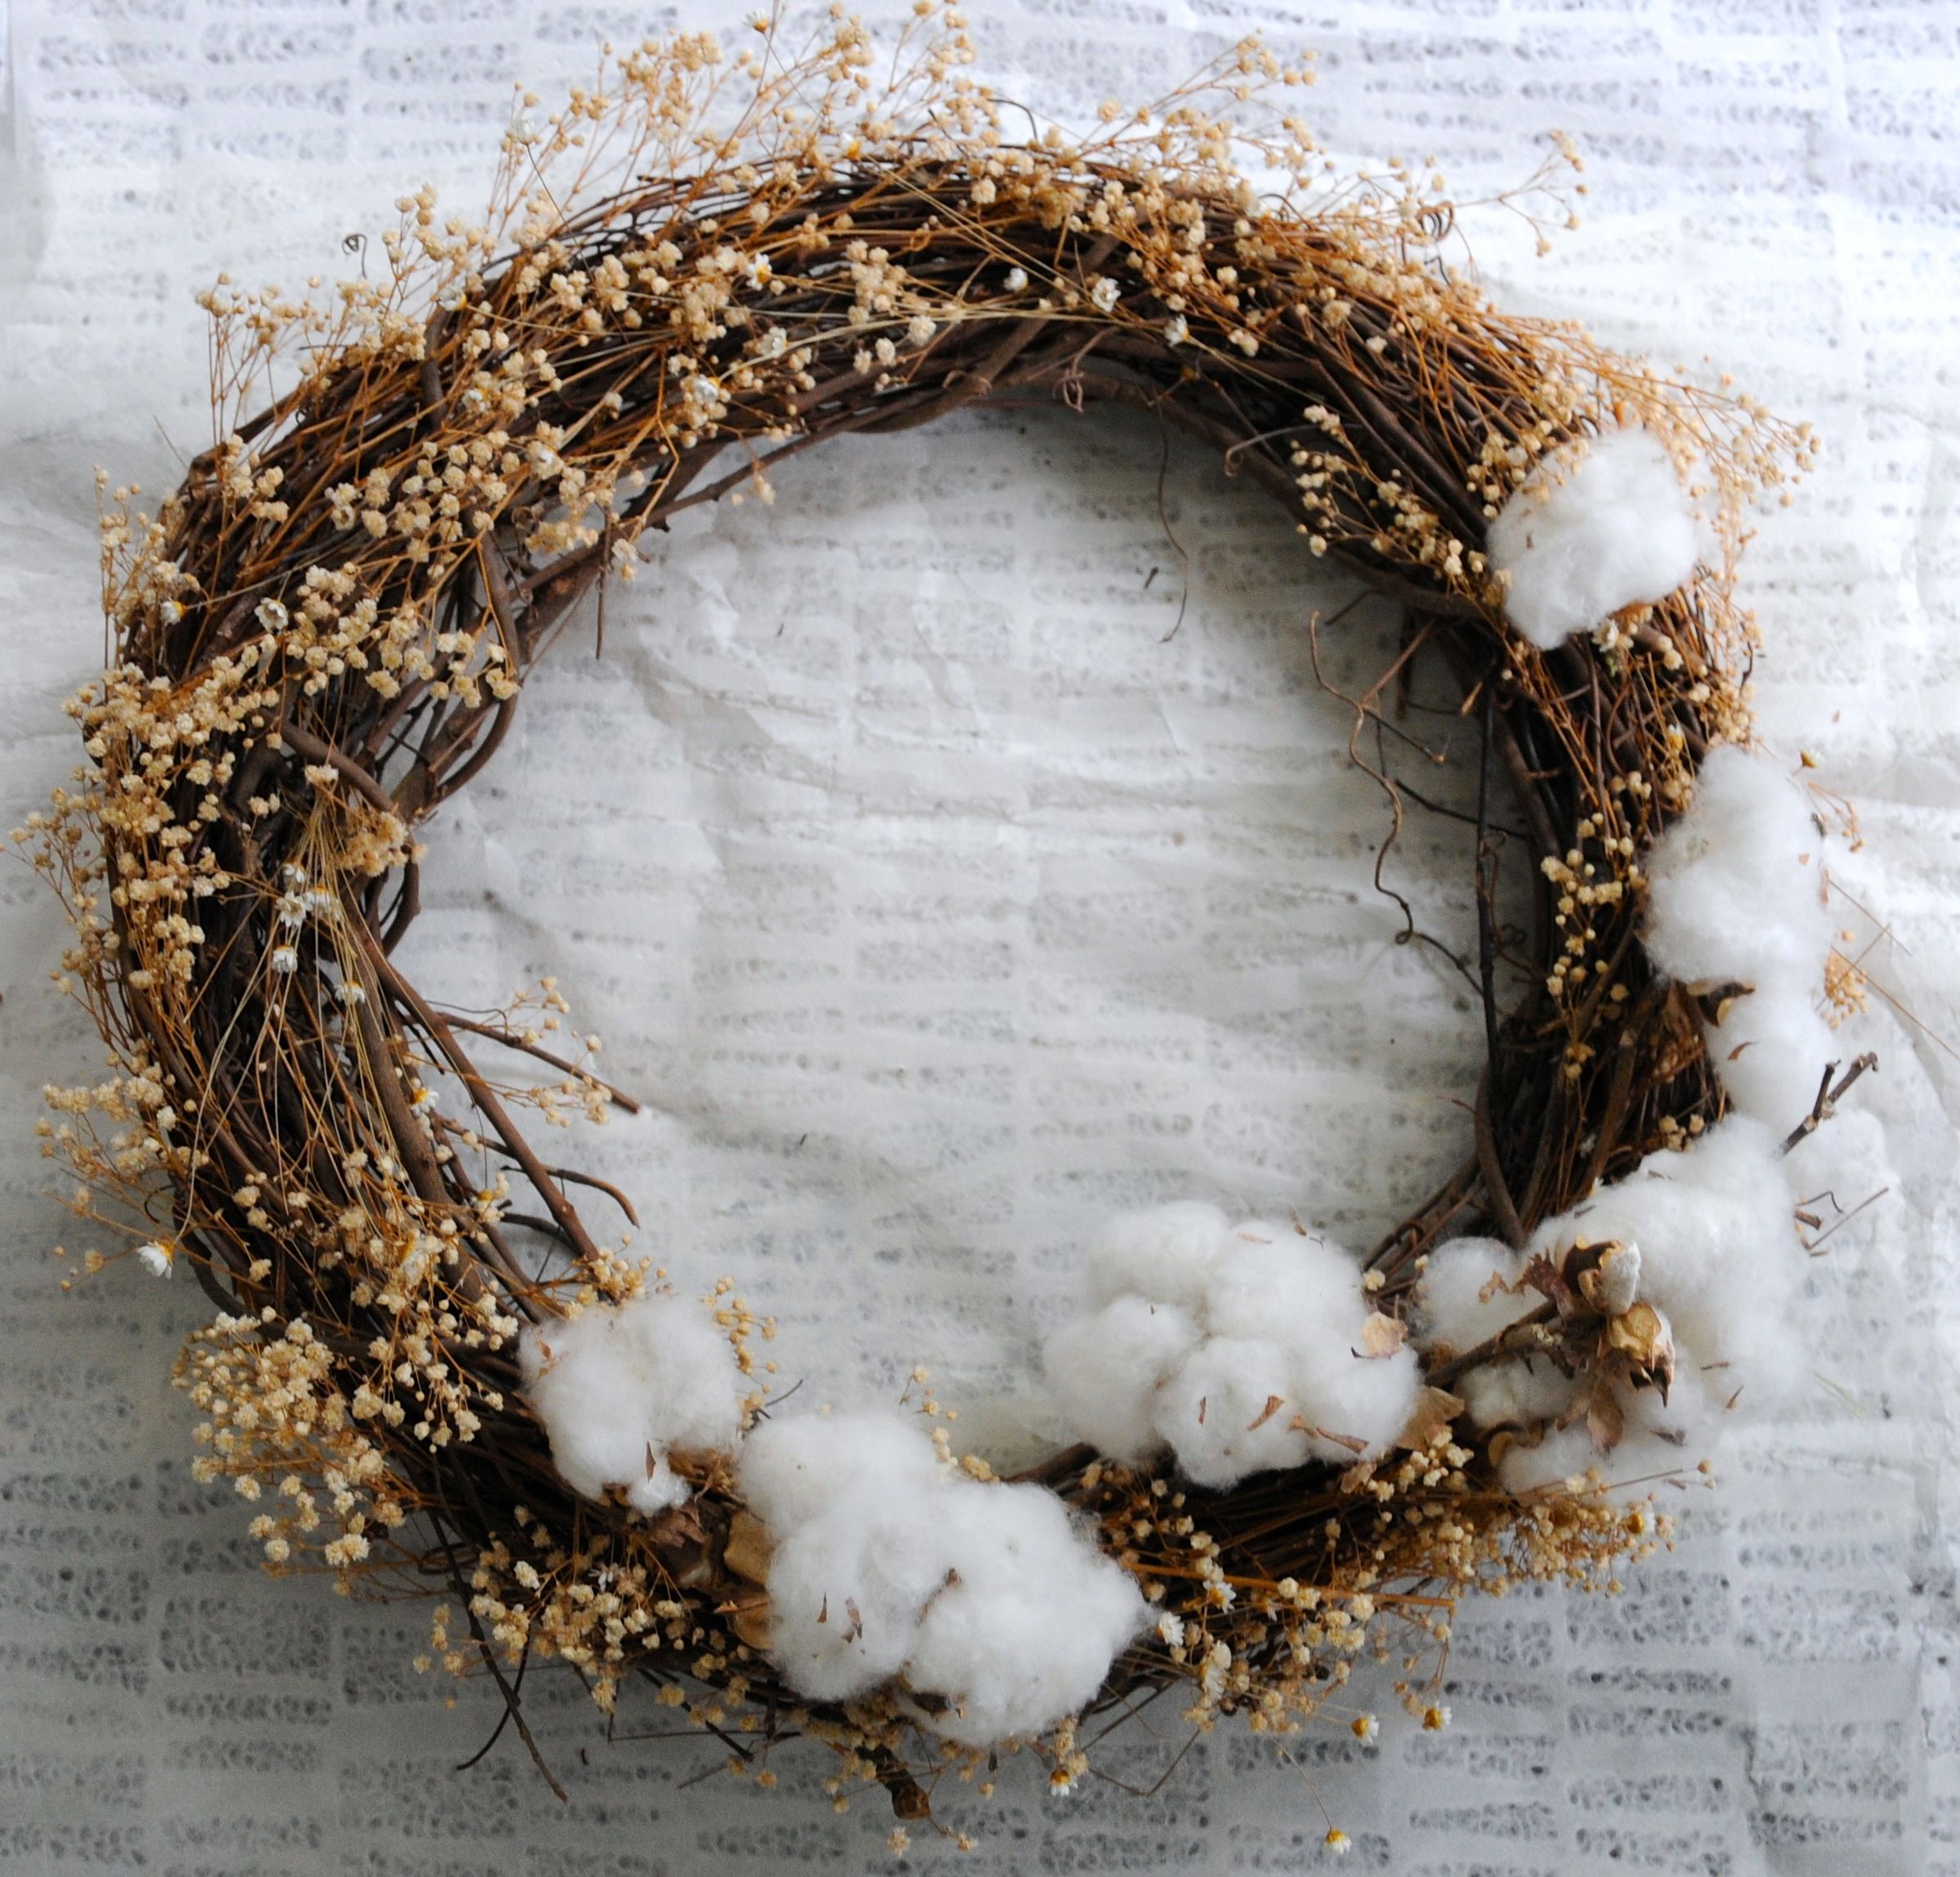 DIY dried daisies and cotton balls wreath